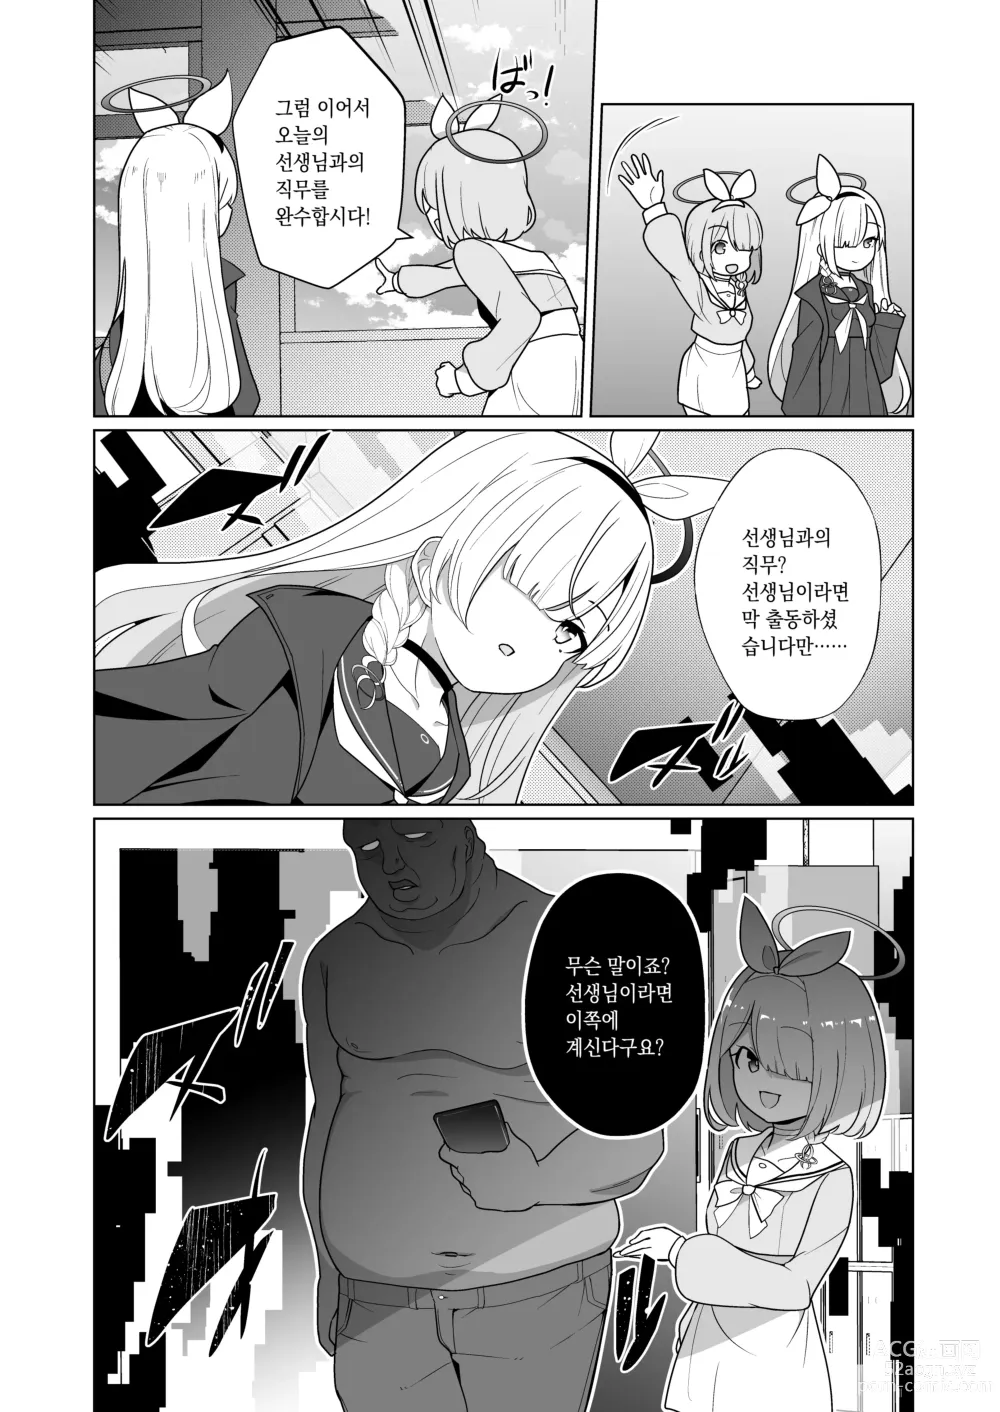 Page 4 of doujinshi 싫어하는 프라나가 기꺼이 봉사하는 이야기